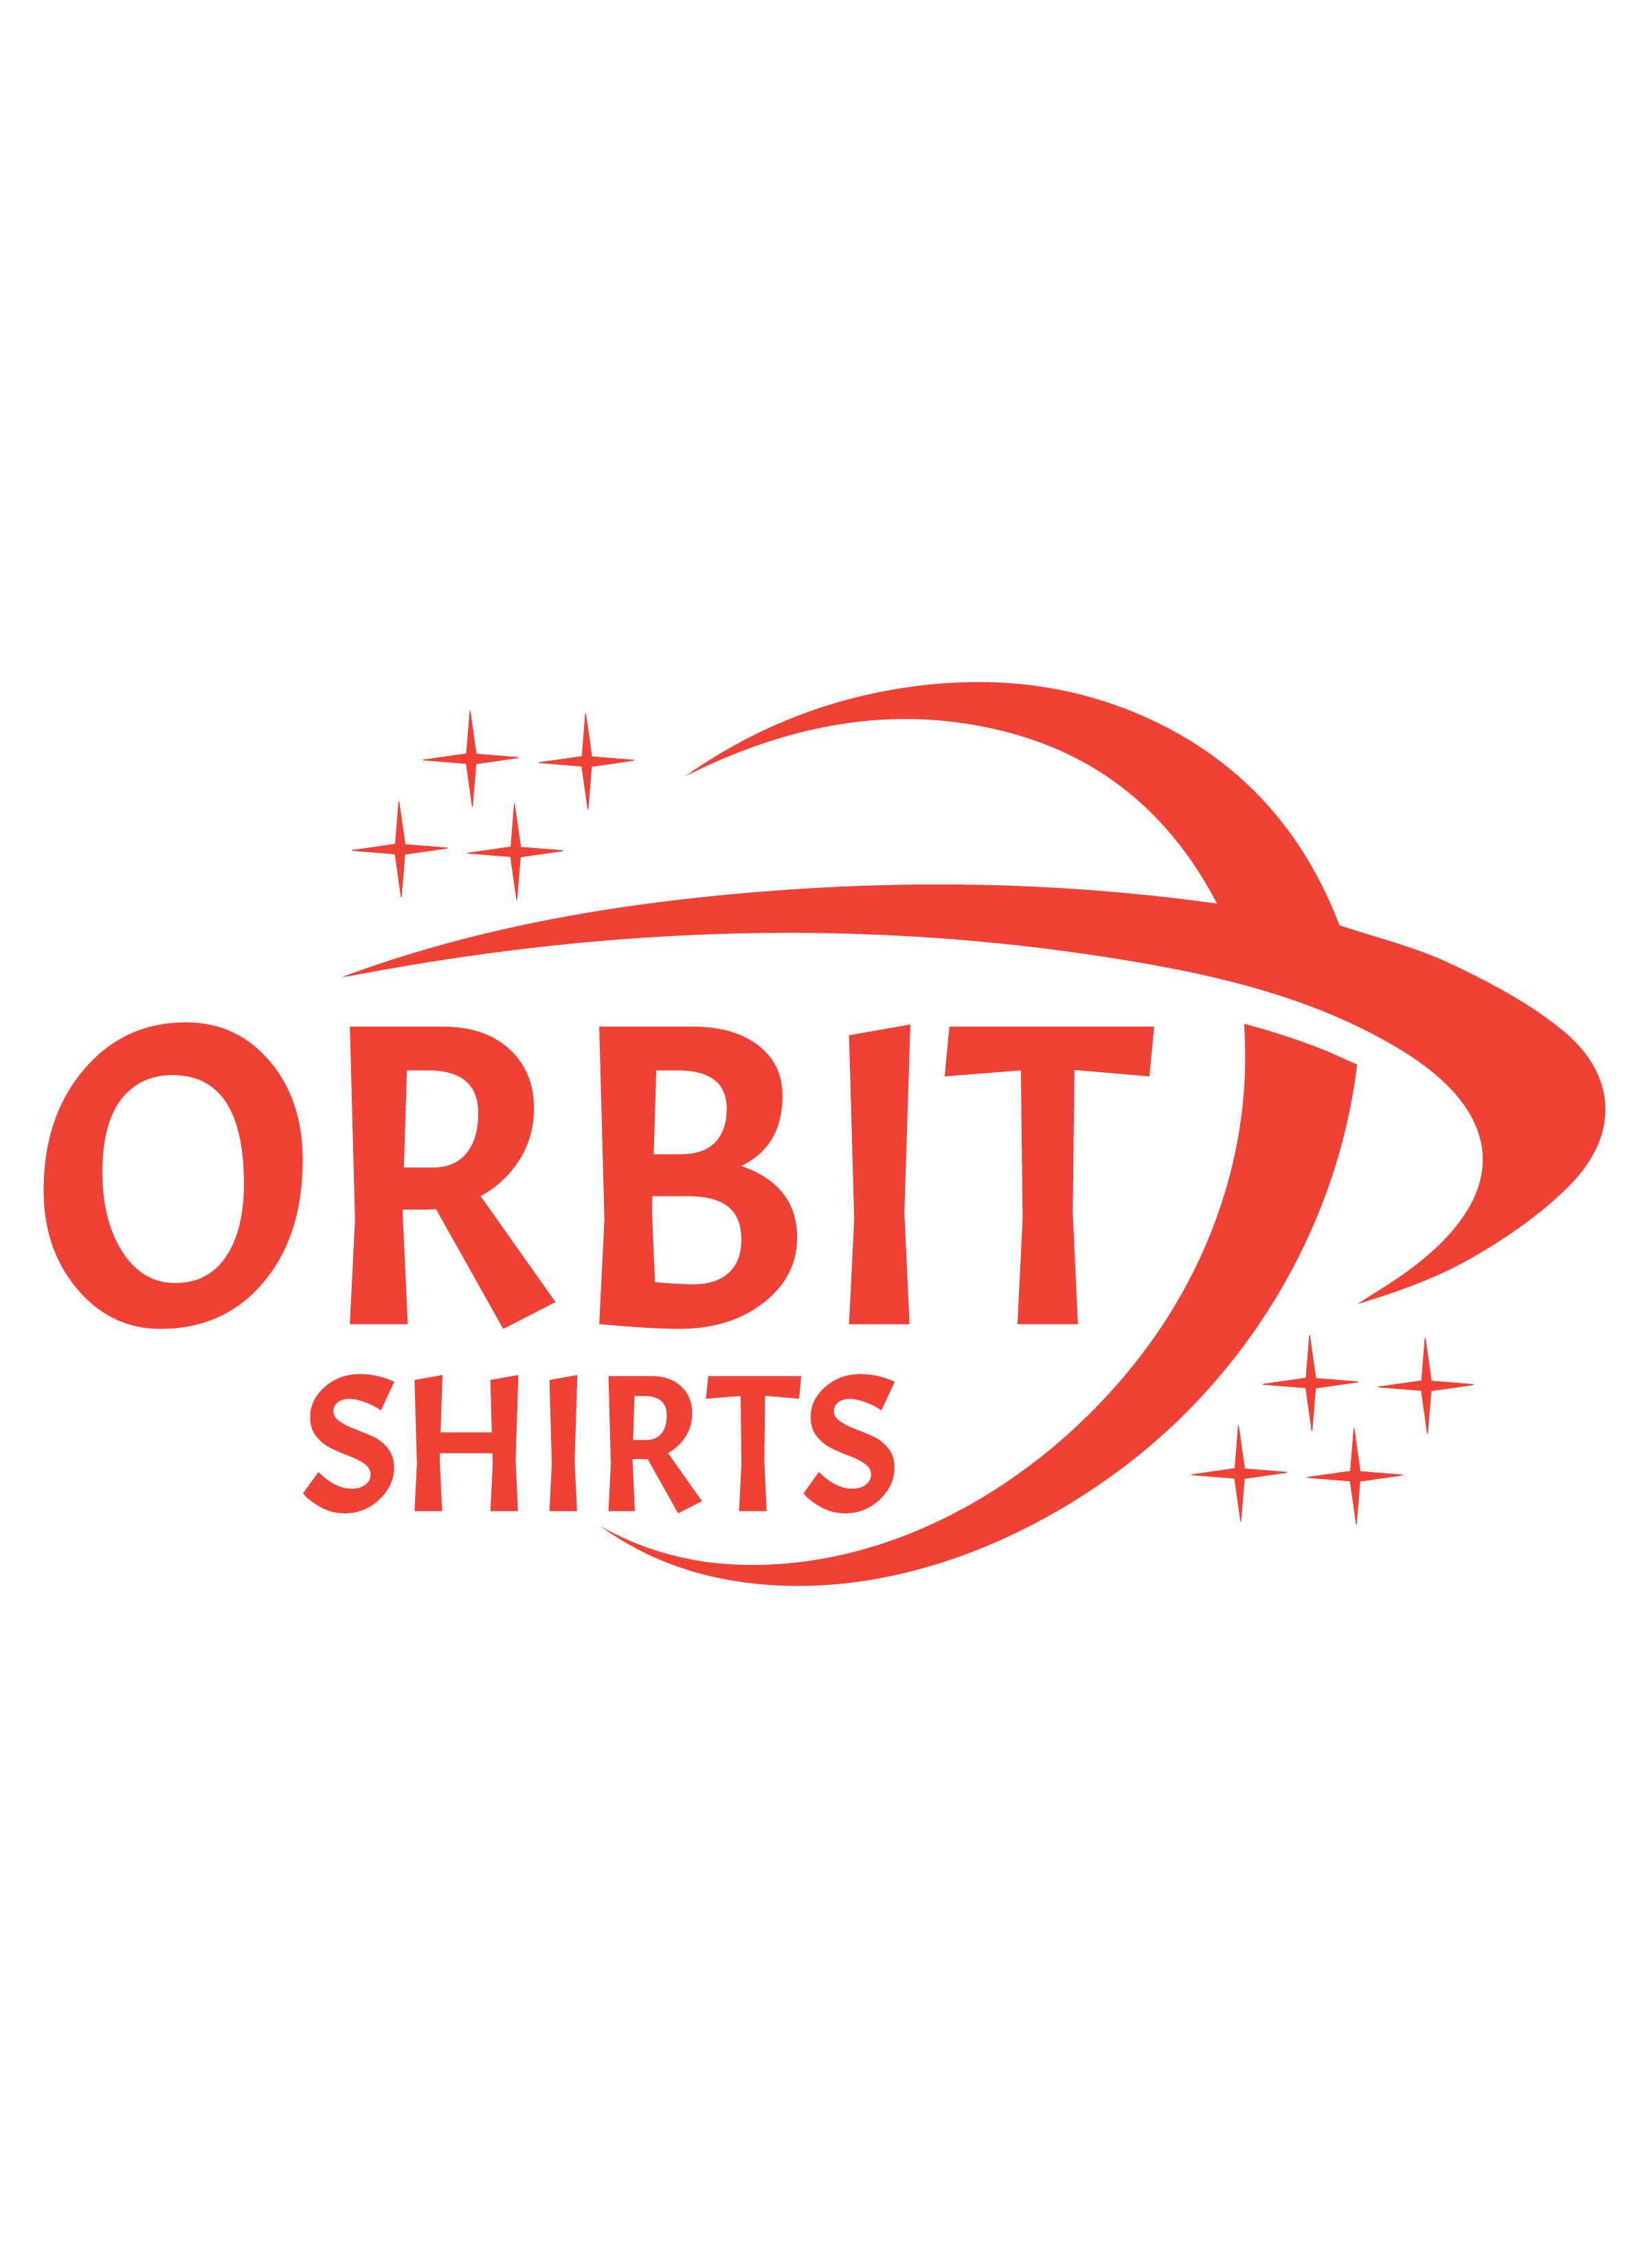 Orbitshirts logo